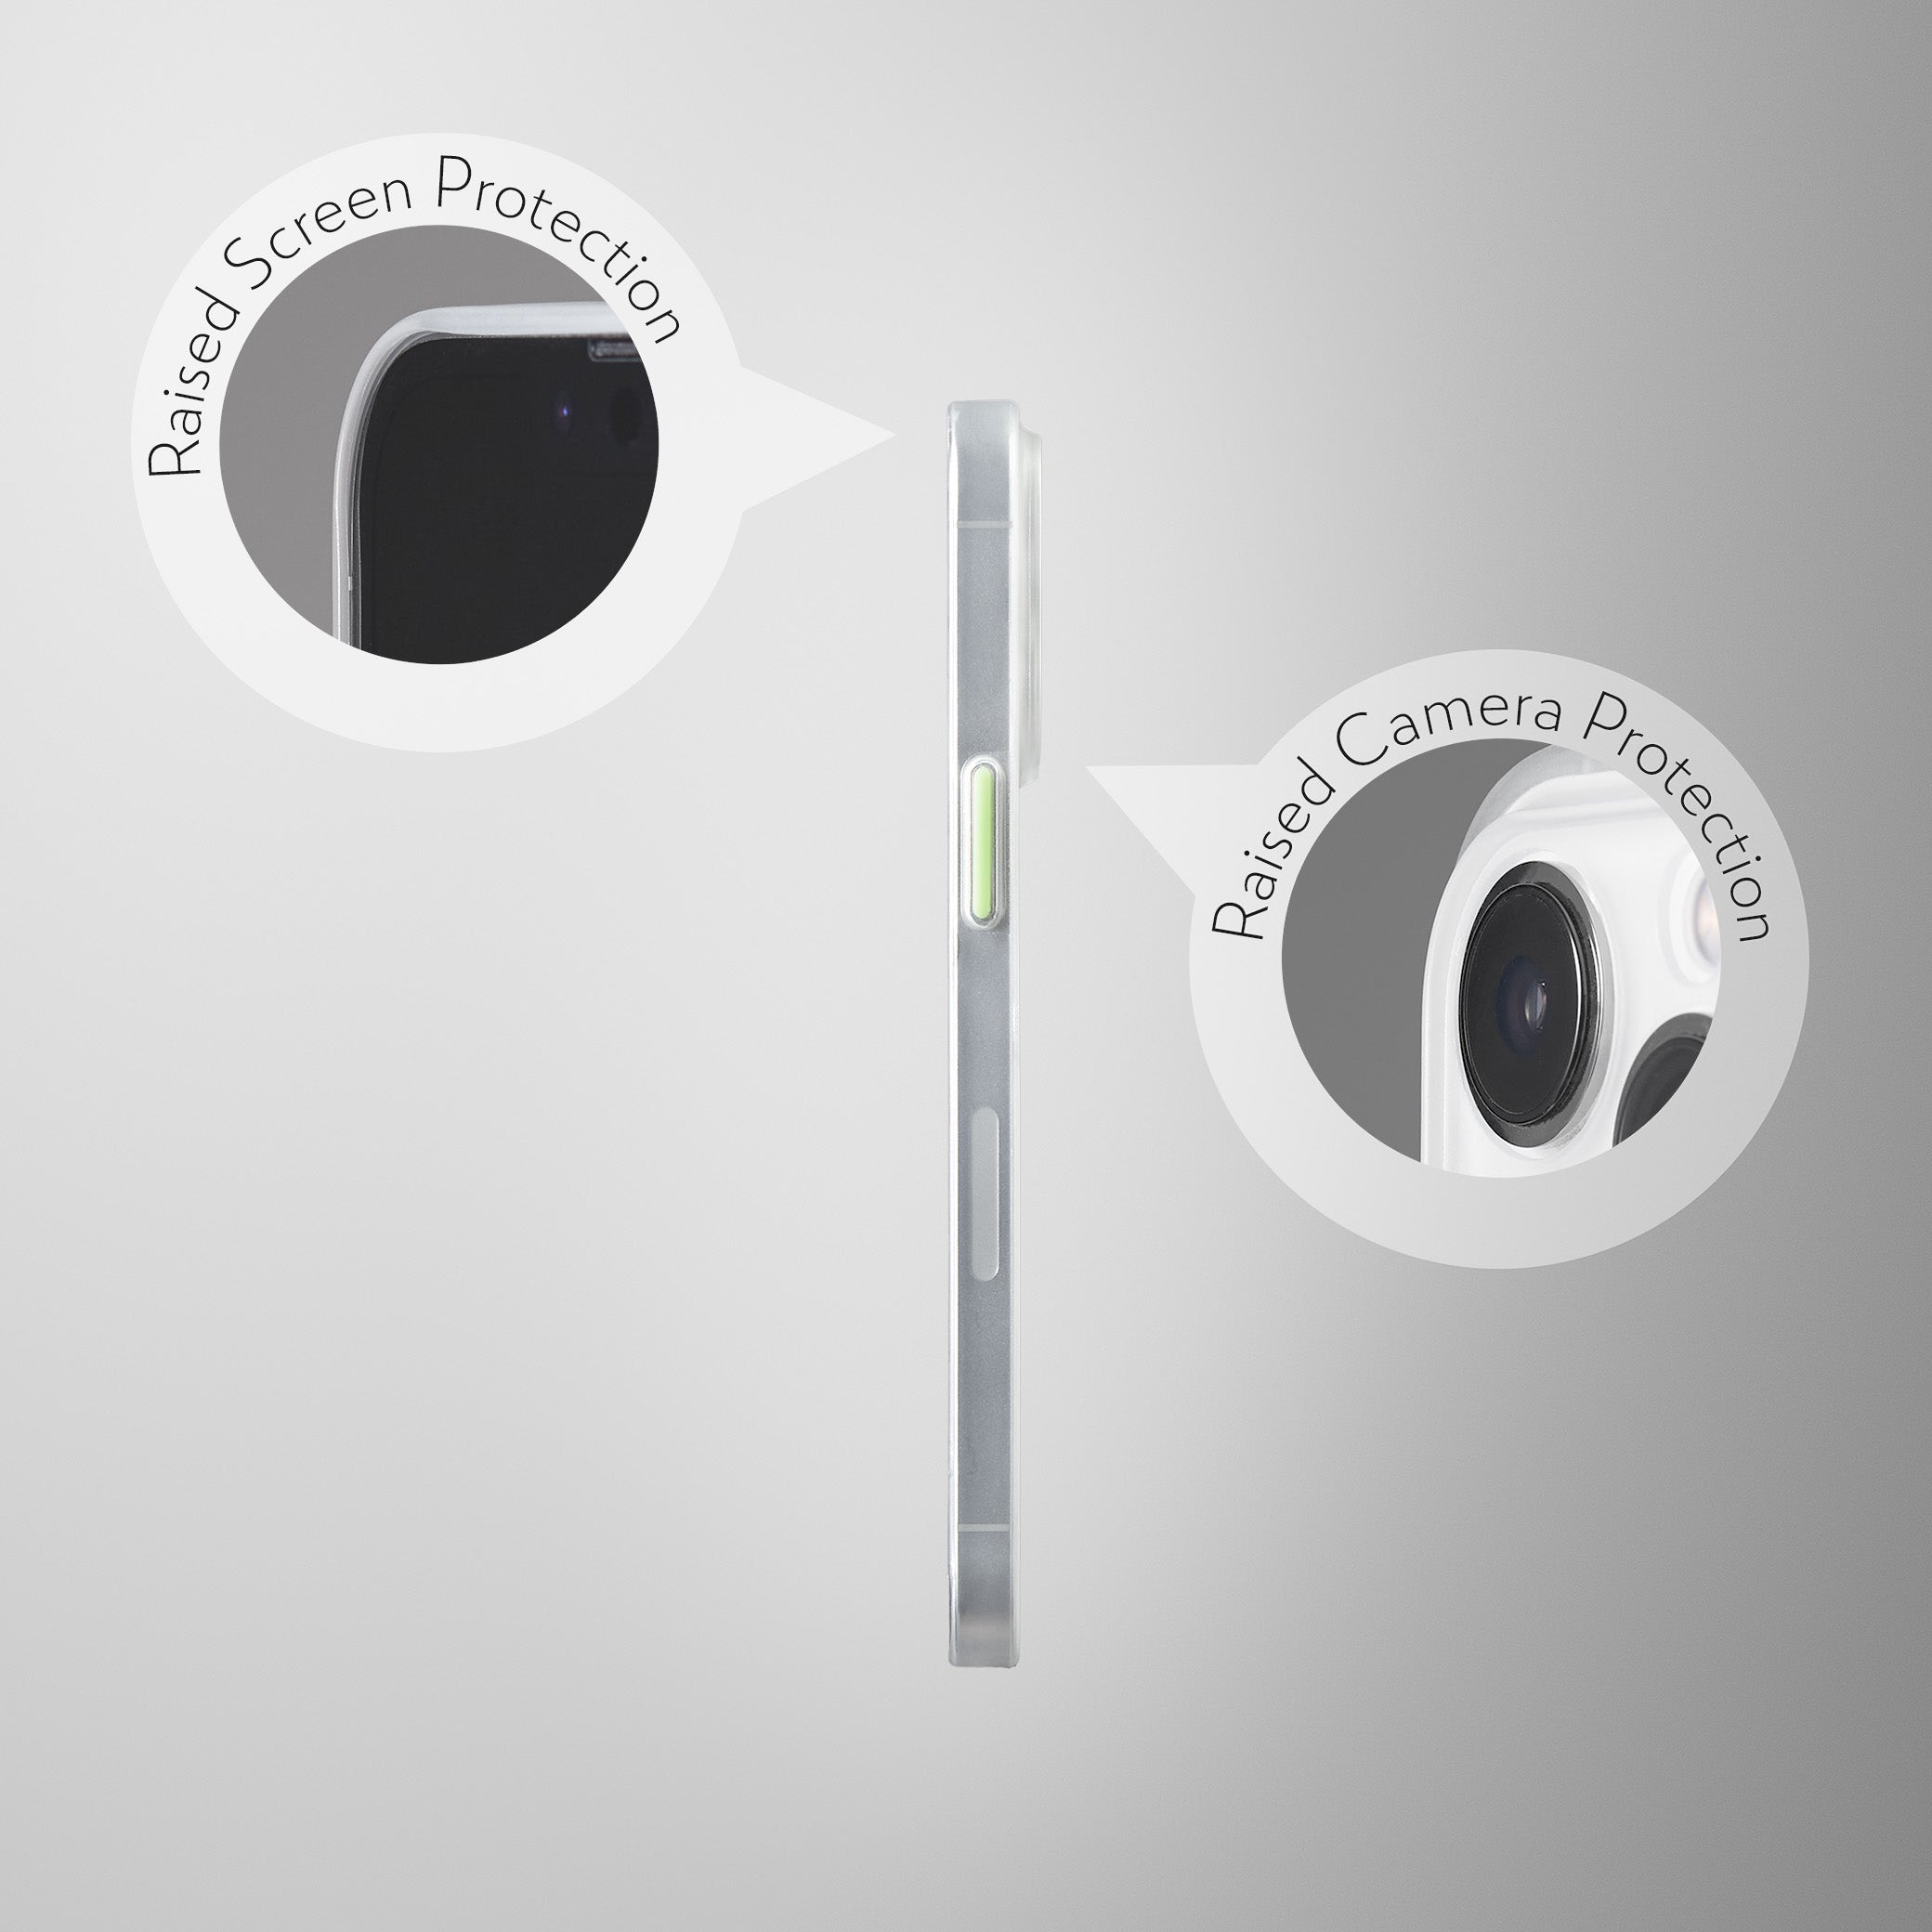 Super Slim Case 2.0 for iPhone 13 Pro Max - Glazed Frost White